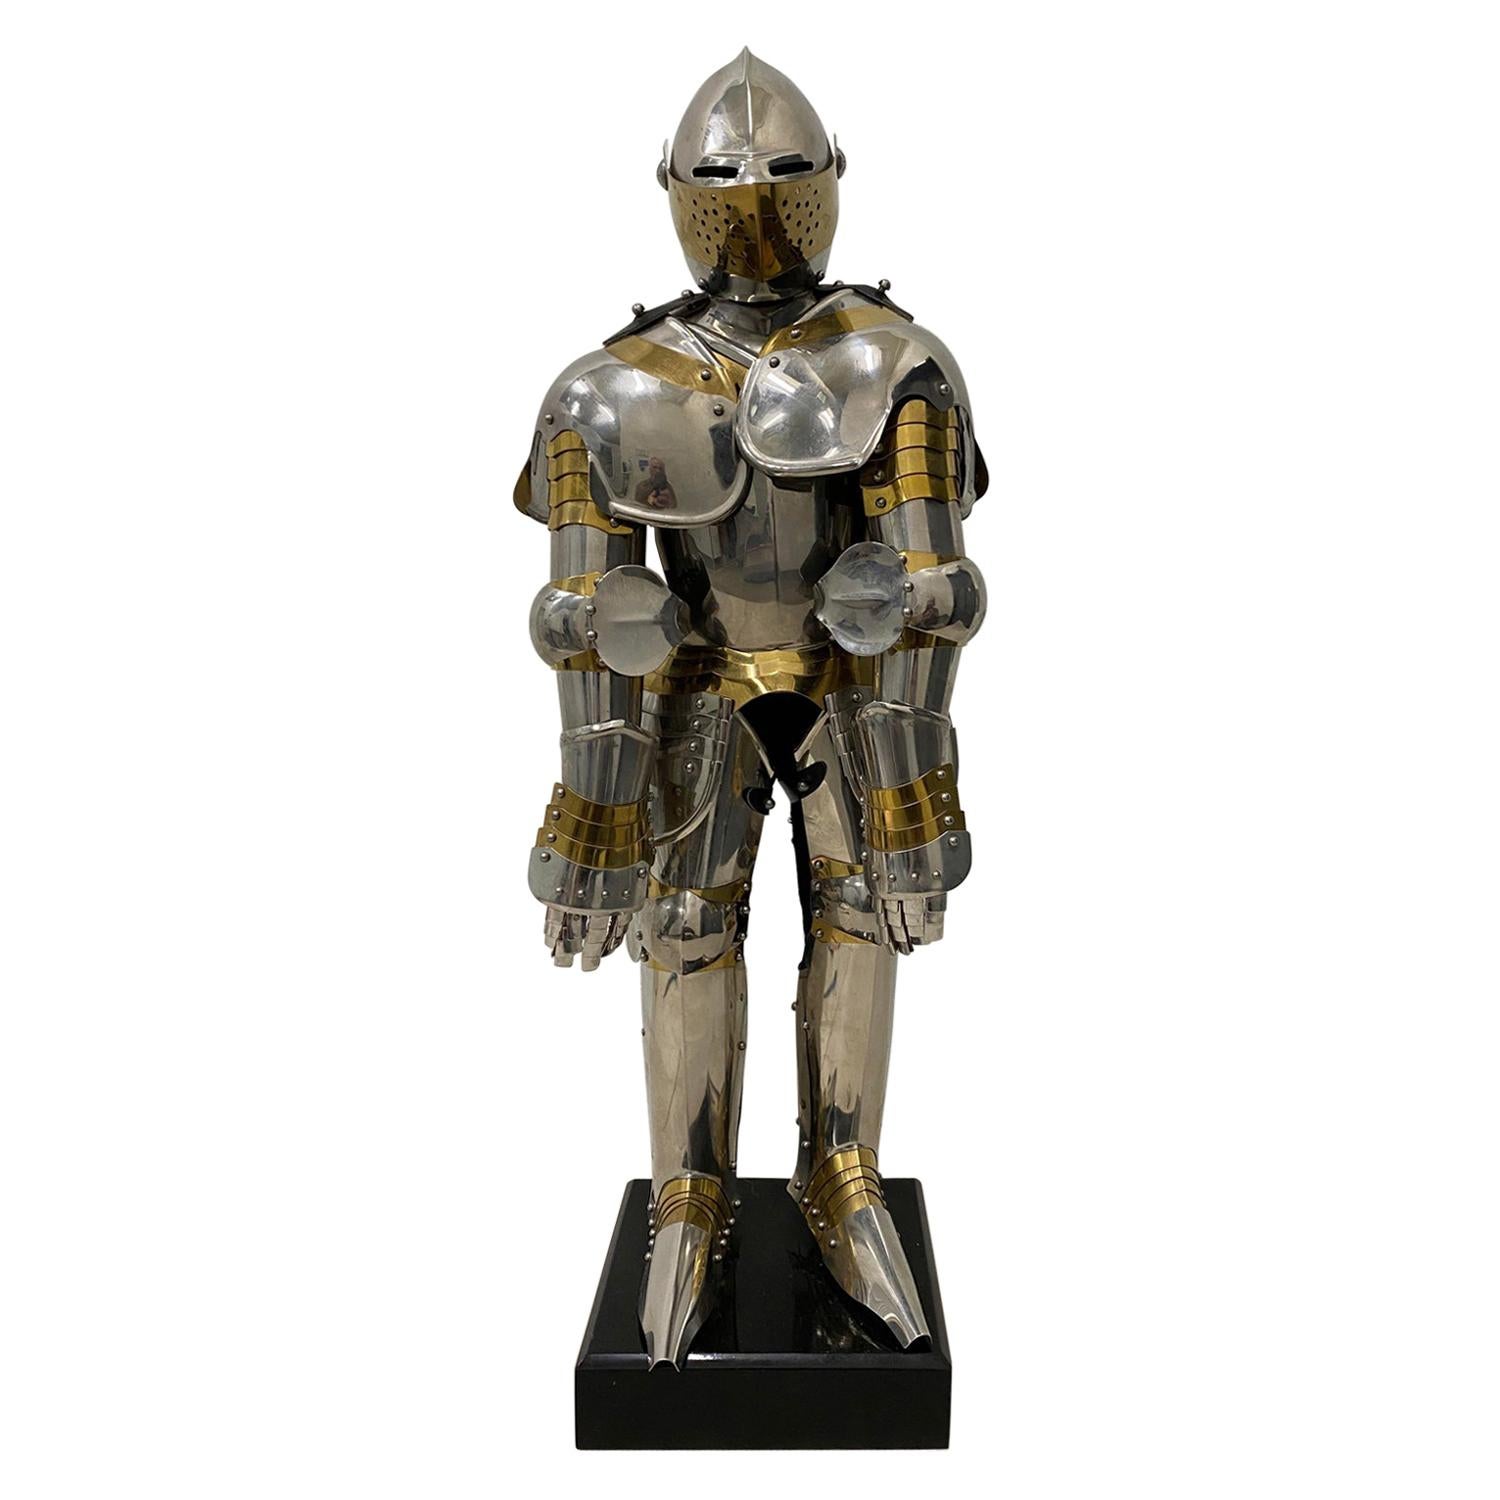 Suit of Armor Sculpture